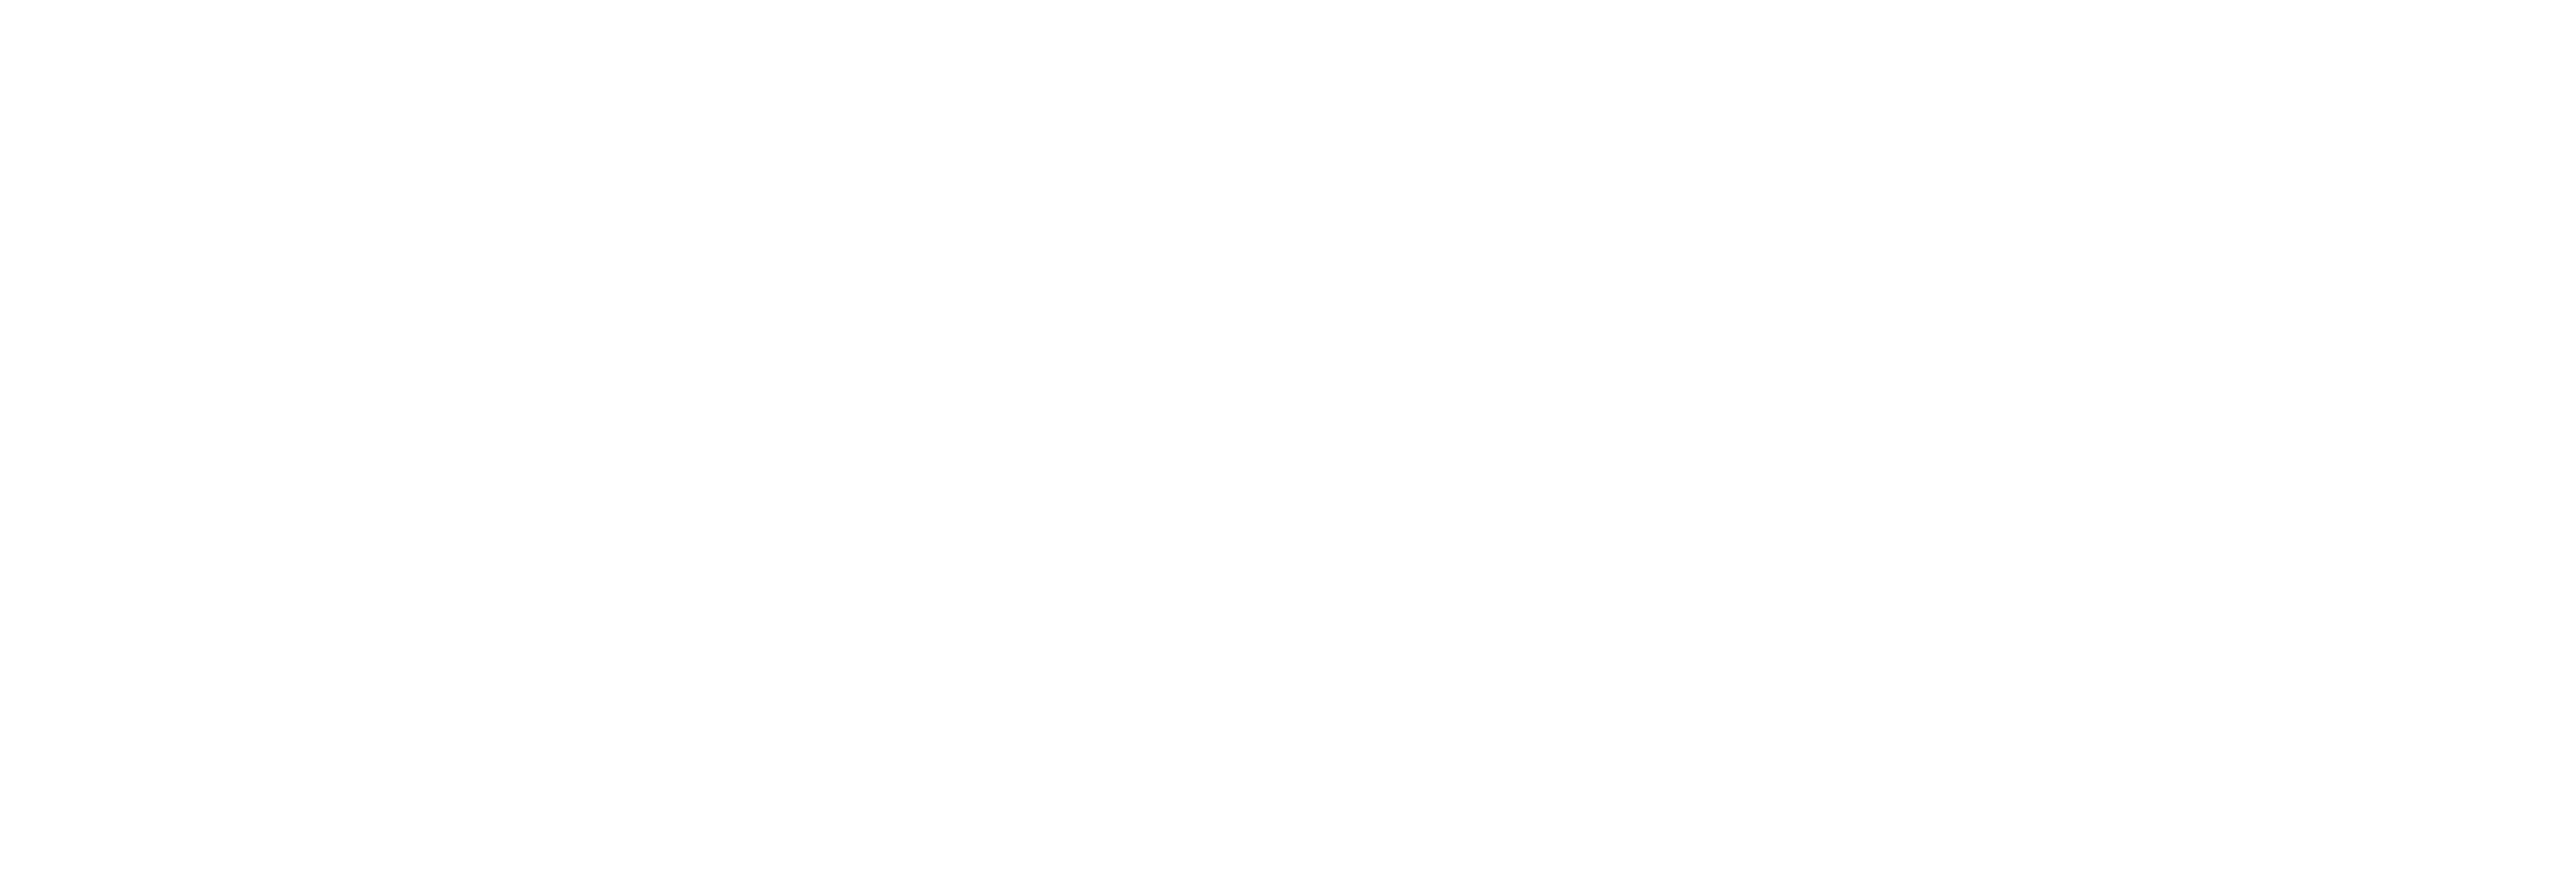 AniCura Dierenartsencentrum Carolovet in Charleroi logo